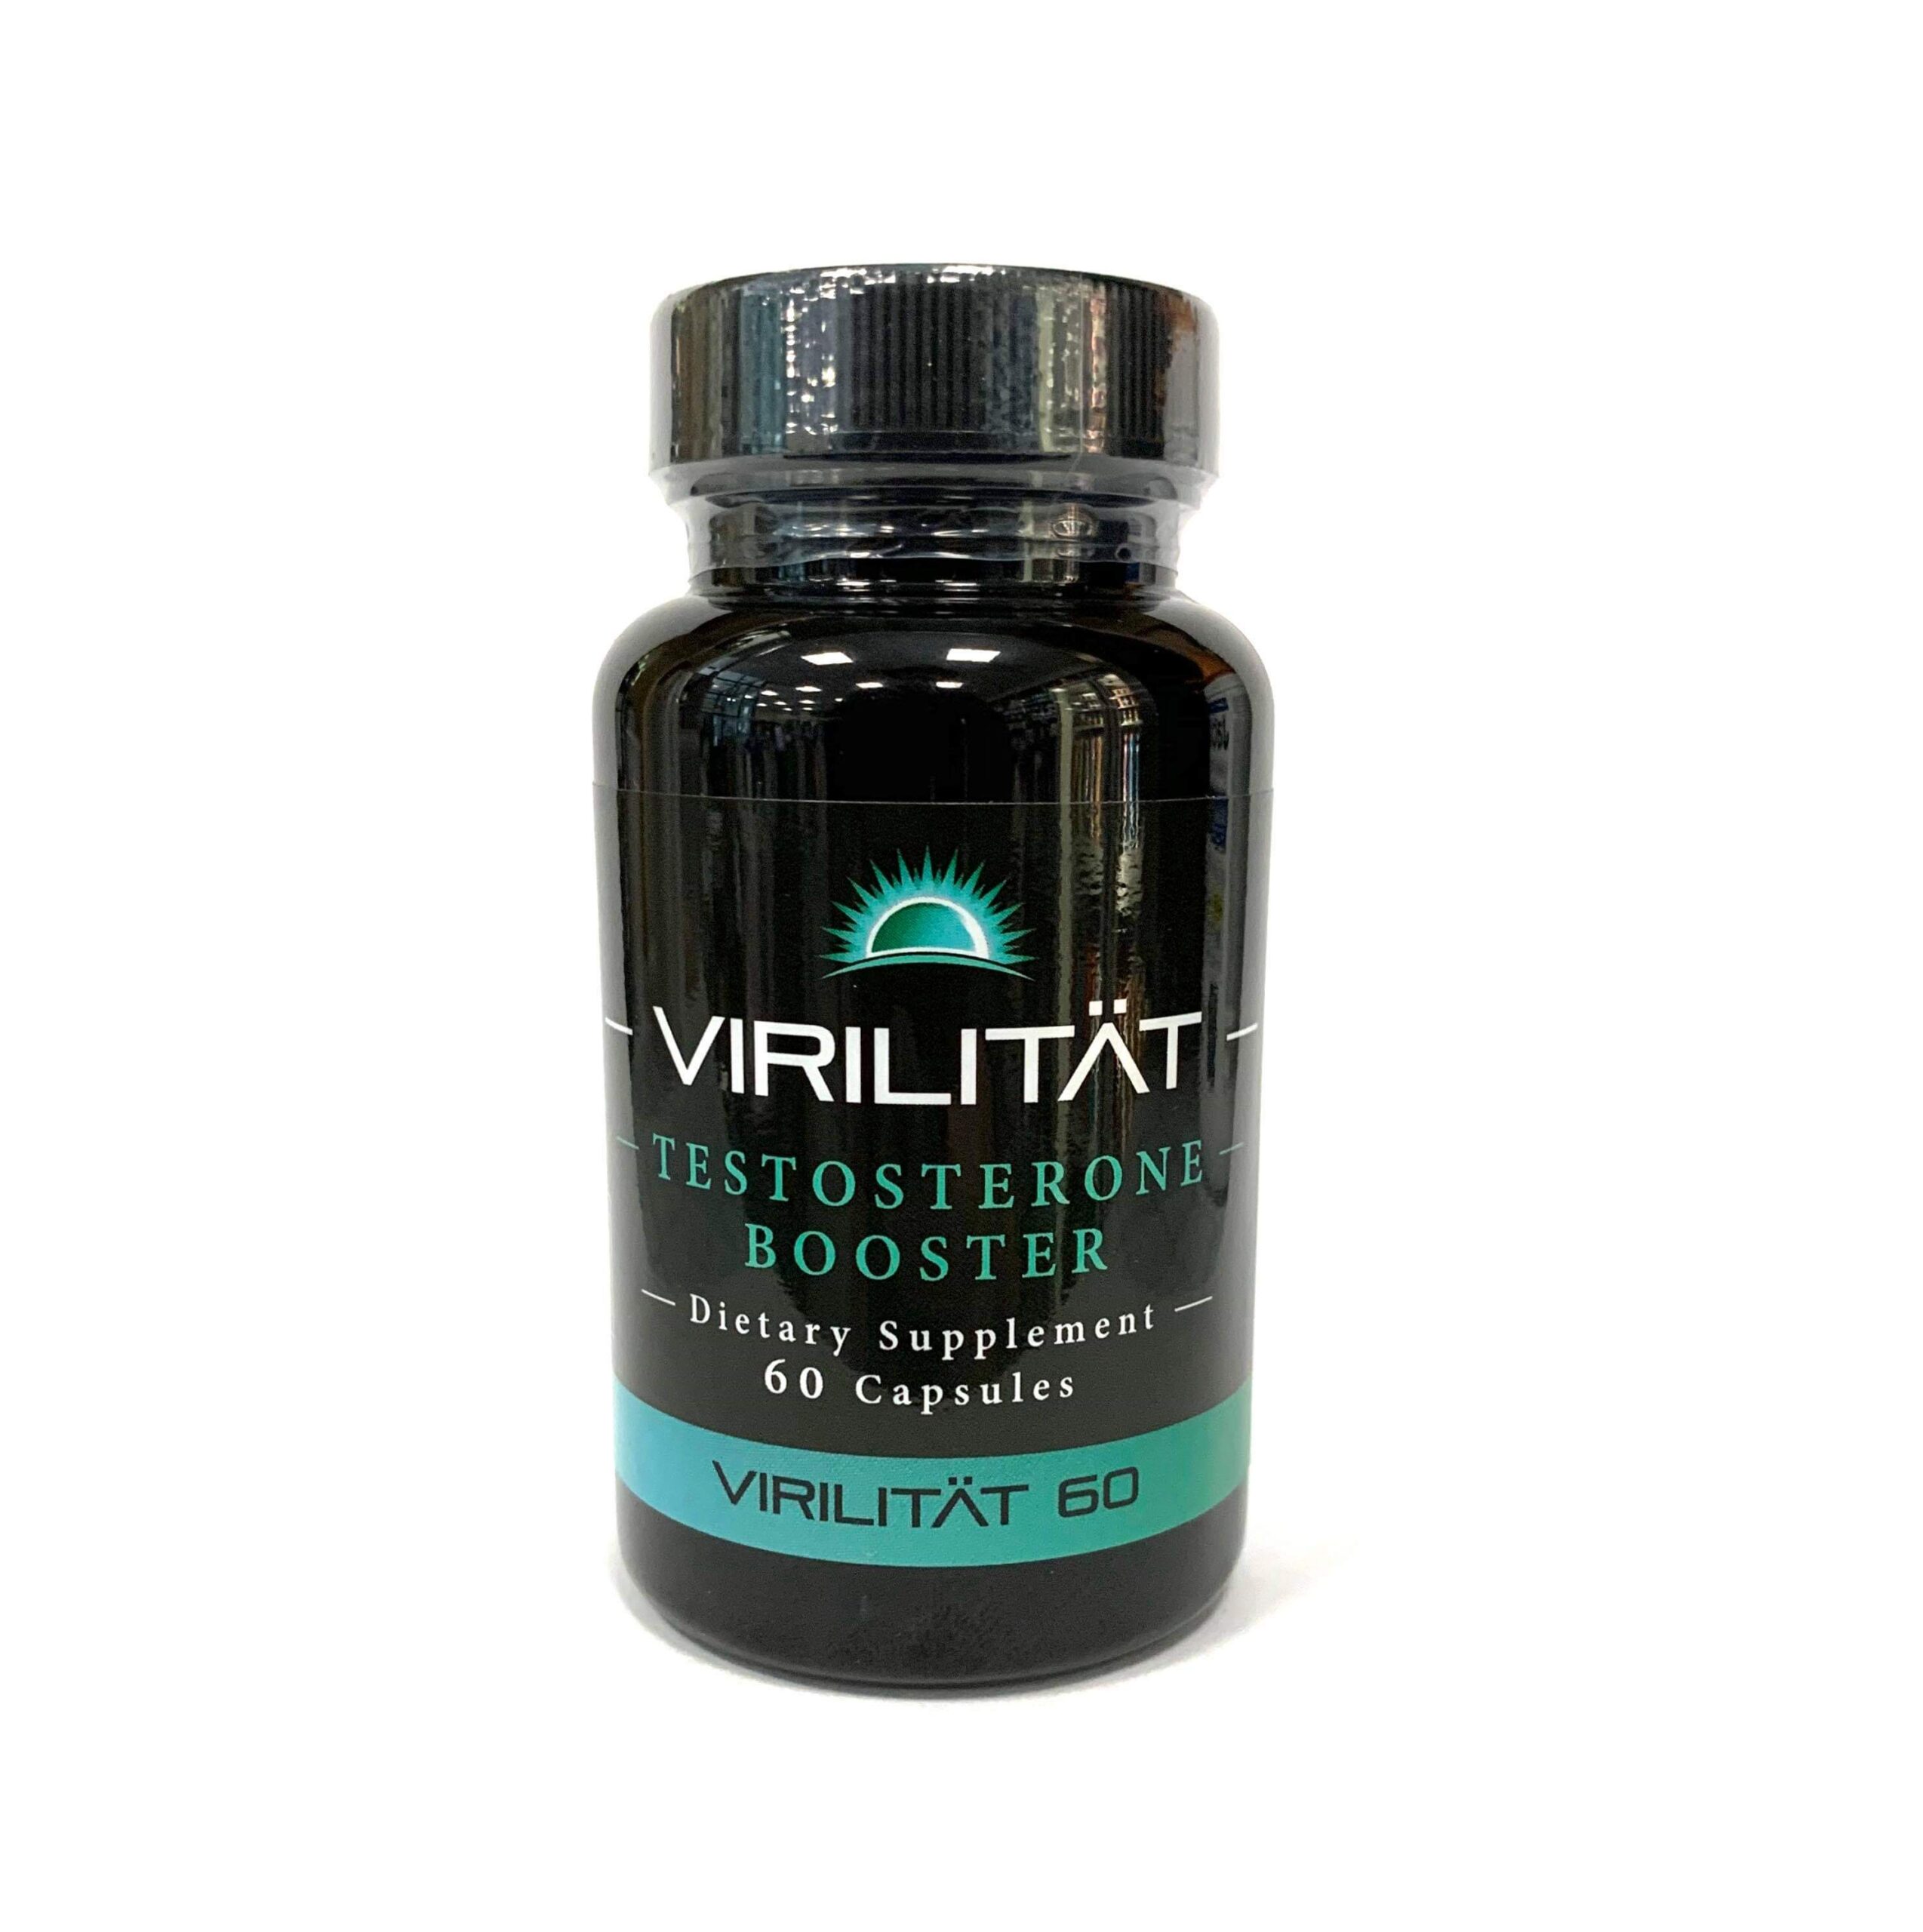 Virilitate 60 Testosterone Booster Reviews